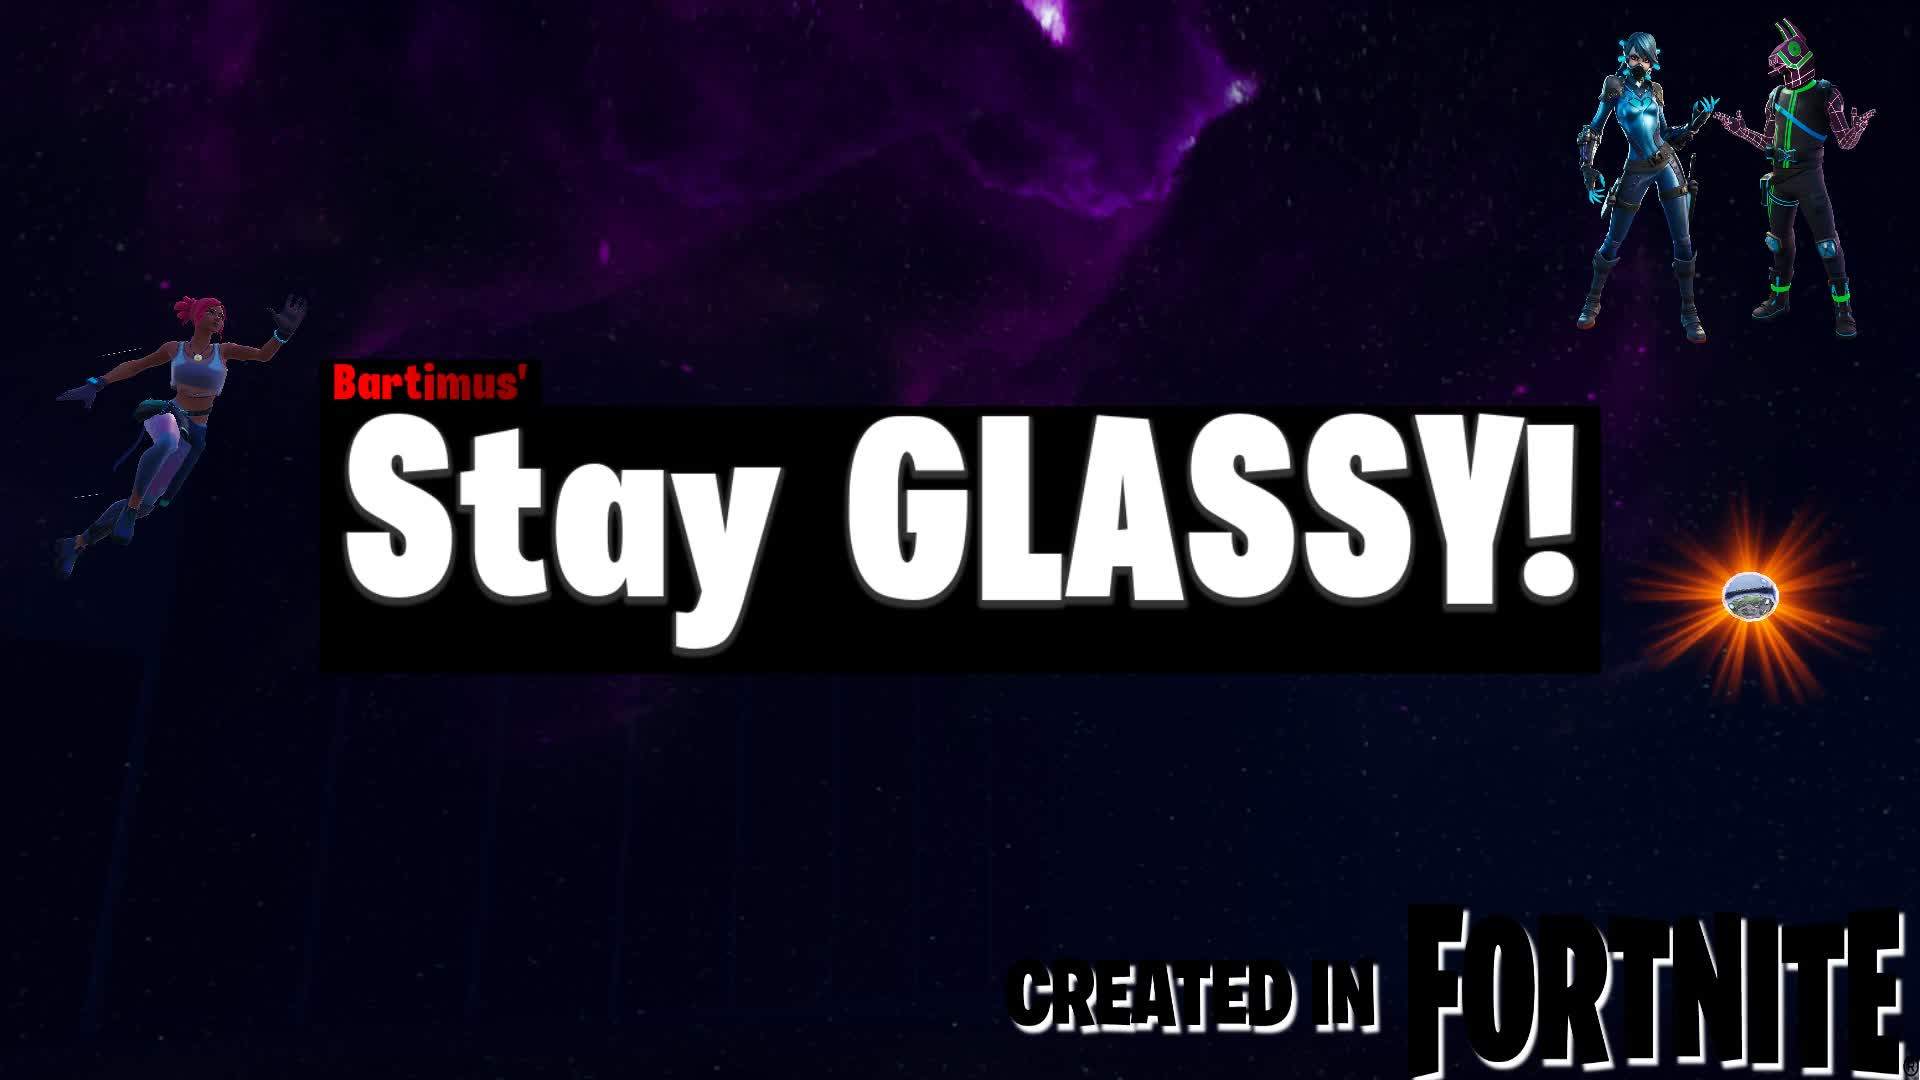 Stay Glassy